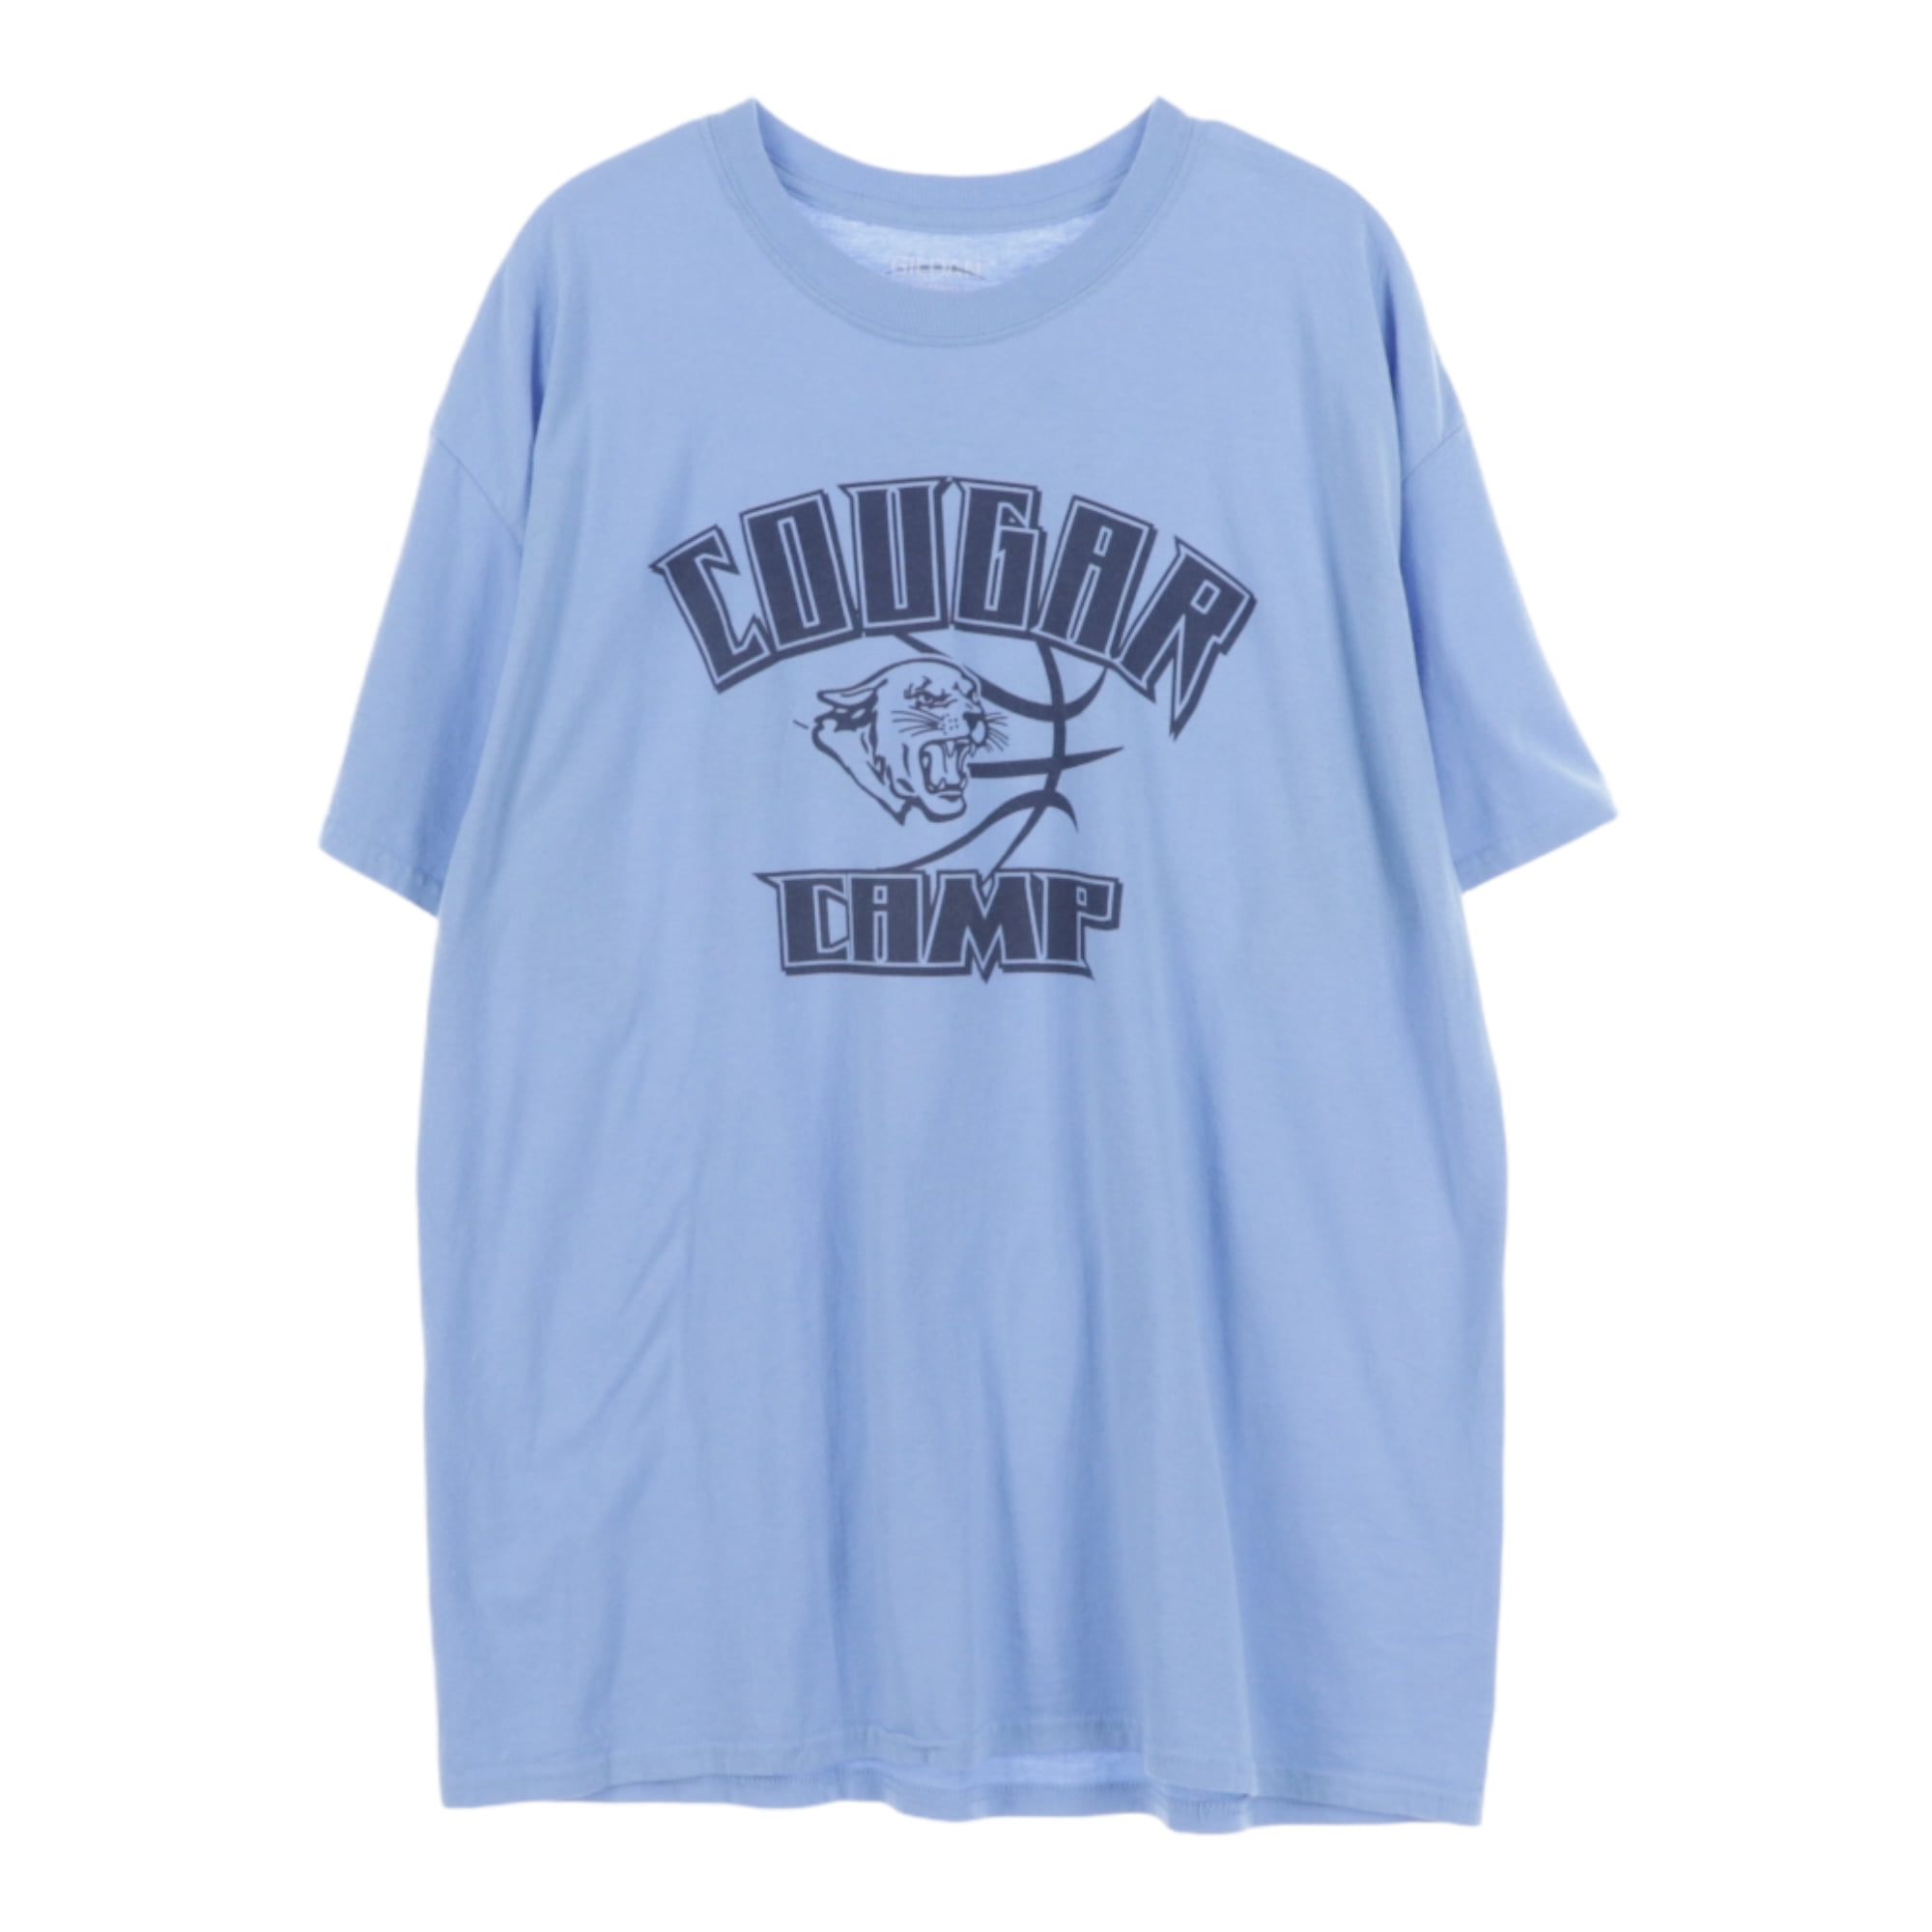 Gildan,T-Shirts